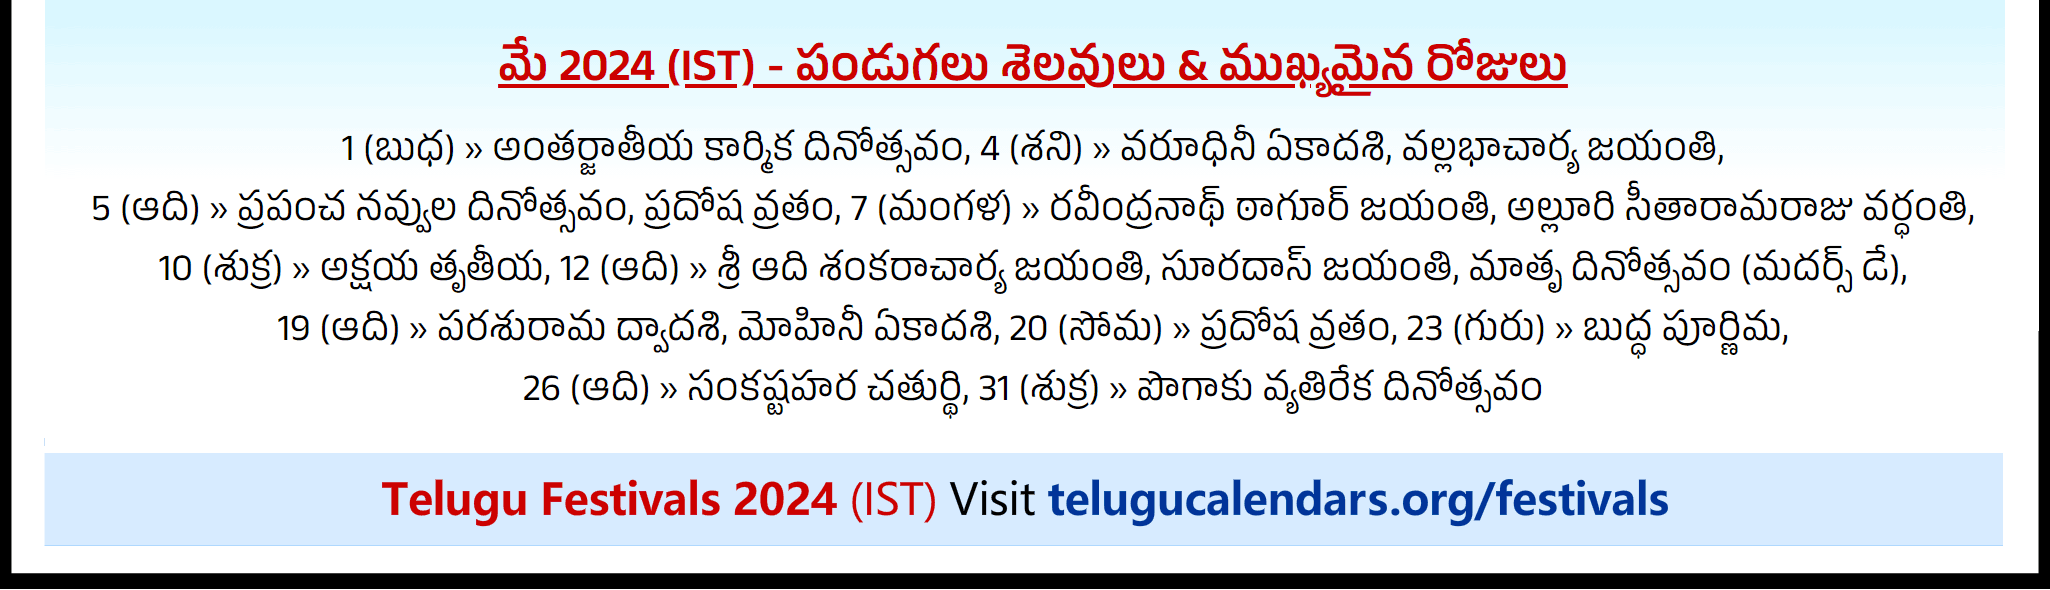 Telugu Festivals 2024 May Chicago